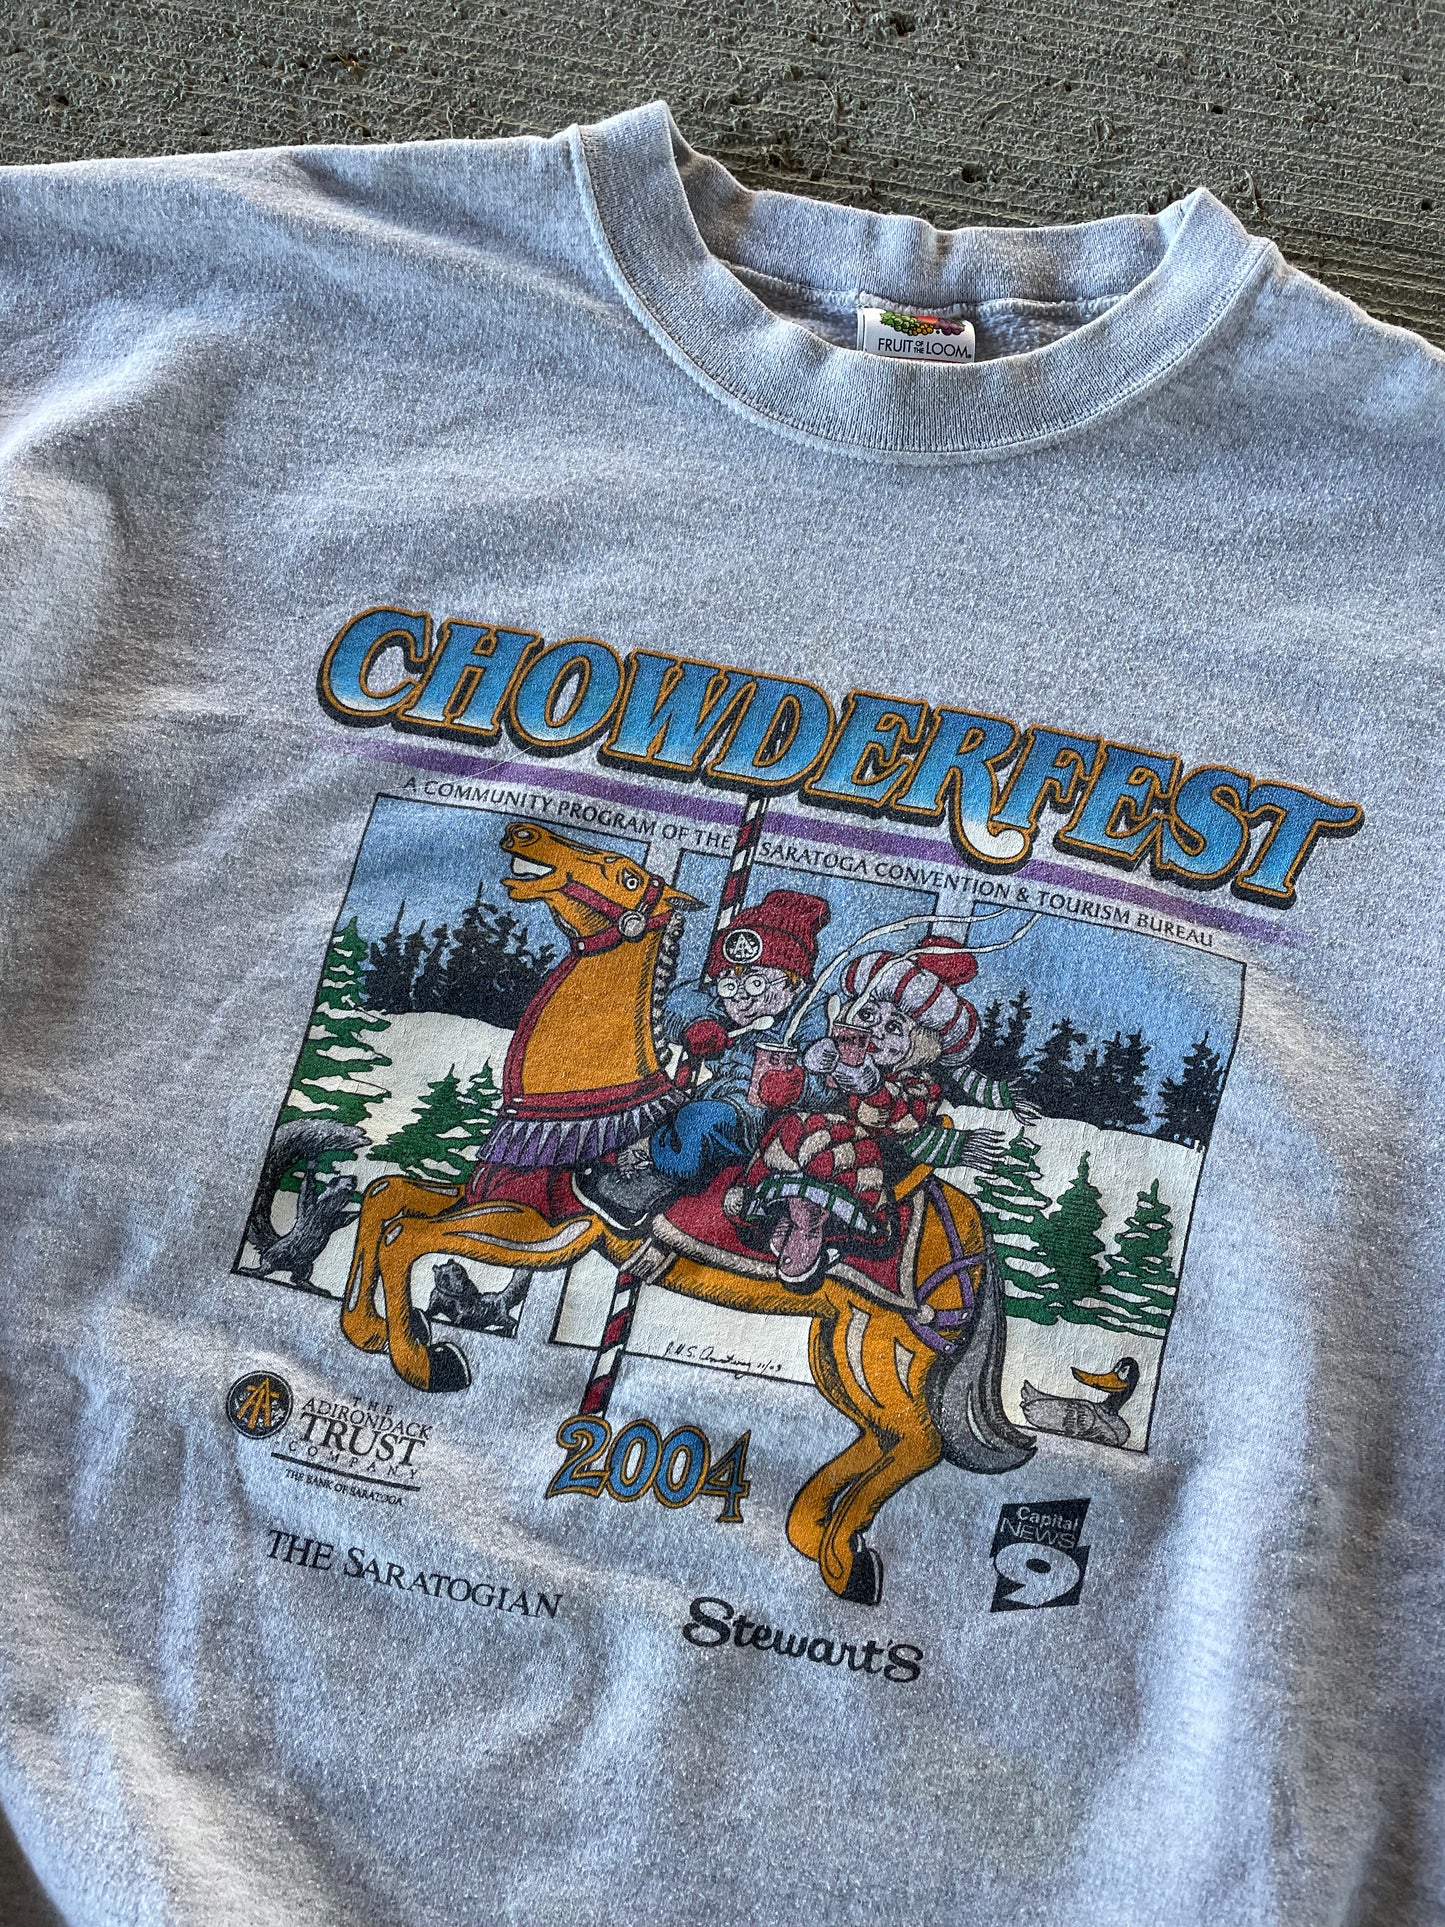 2004 Chowderfest Sweatshirt